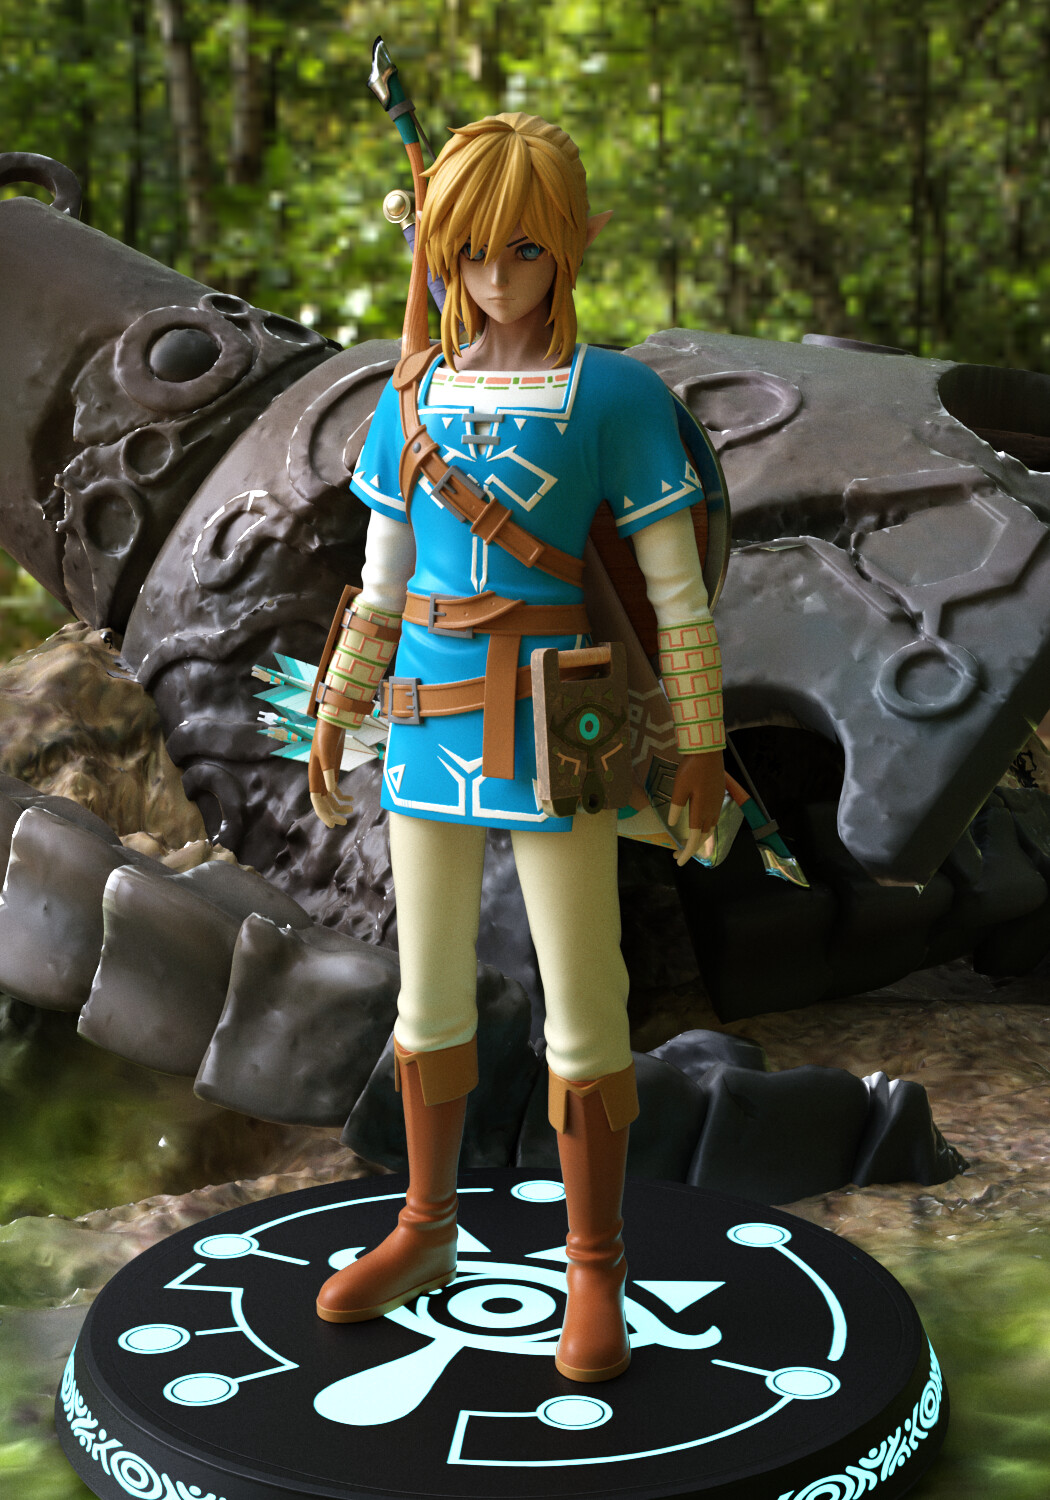 ArtStation - Breath of the Wild Link and Zelda Plush Doll